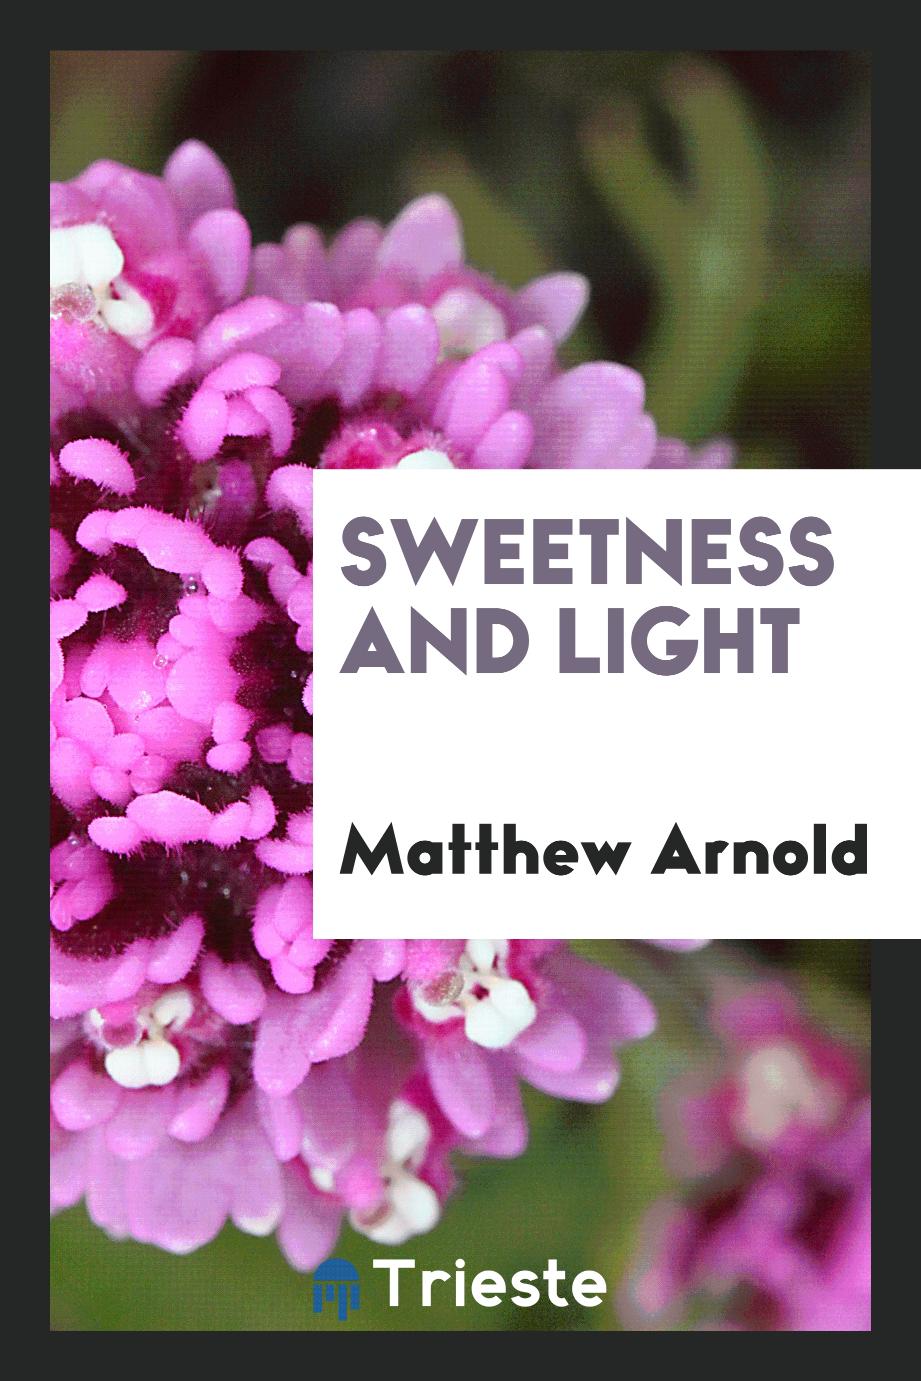 Sweetness and light